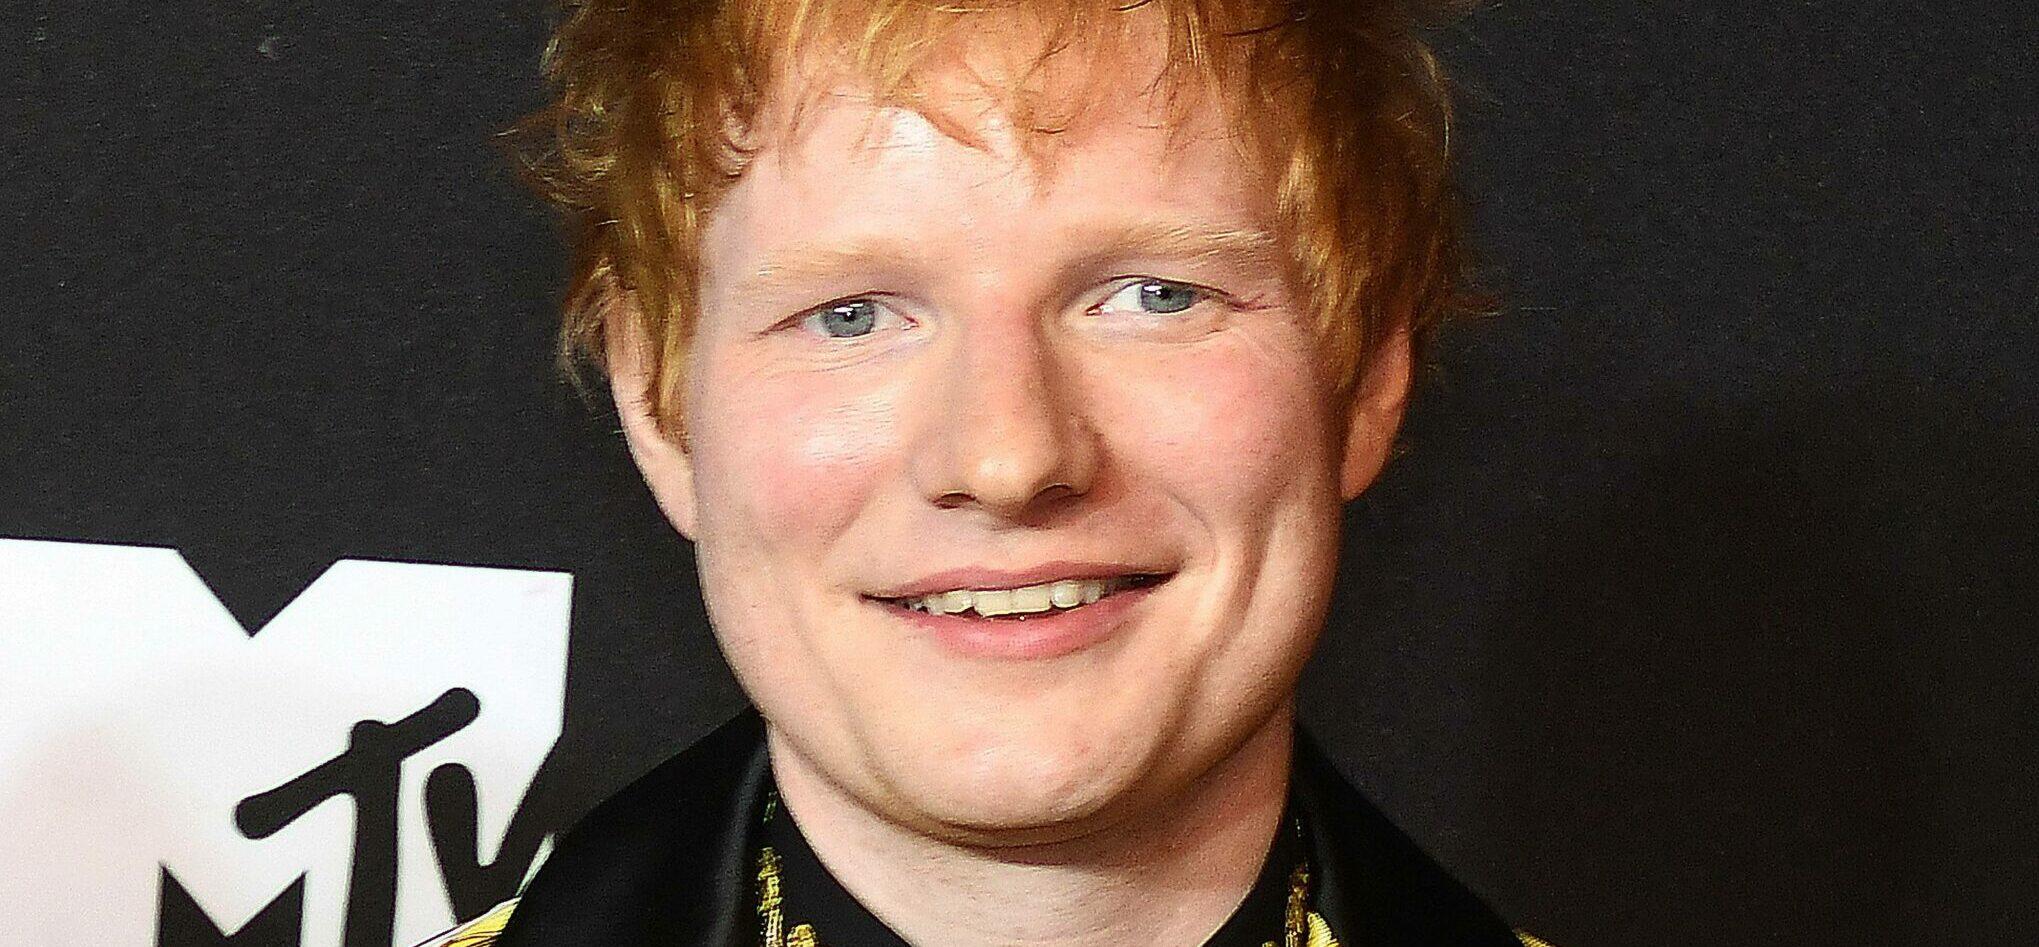 Ed Sheeran at the 2021 MTV Video Music Awards - Arrivals